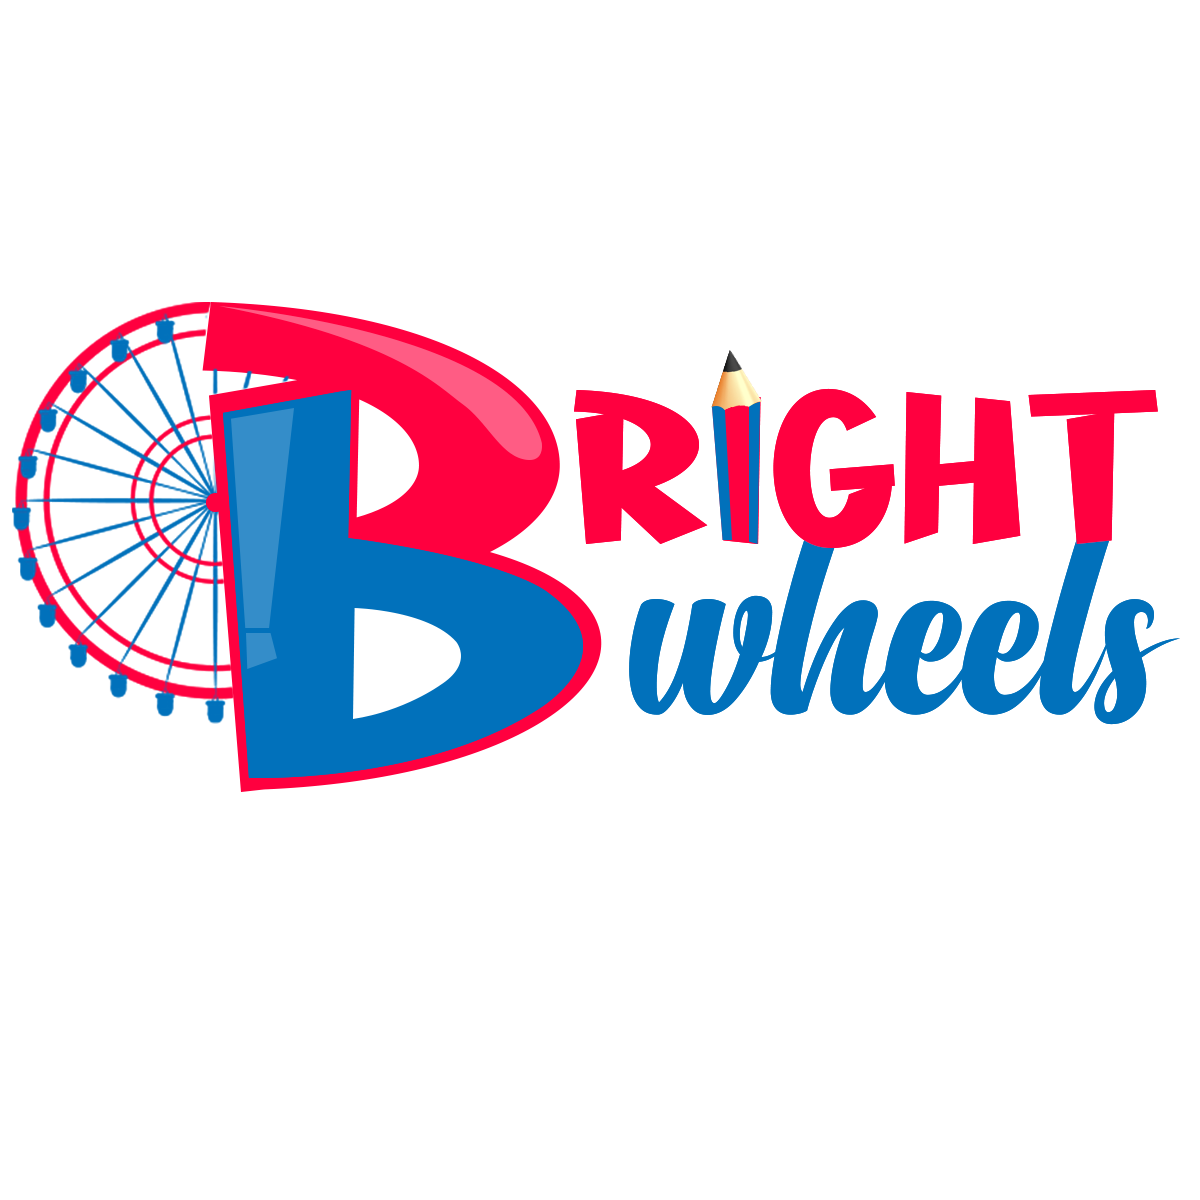 brightwheels franchise